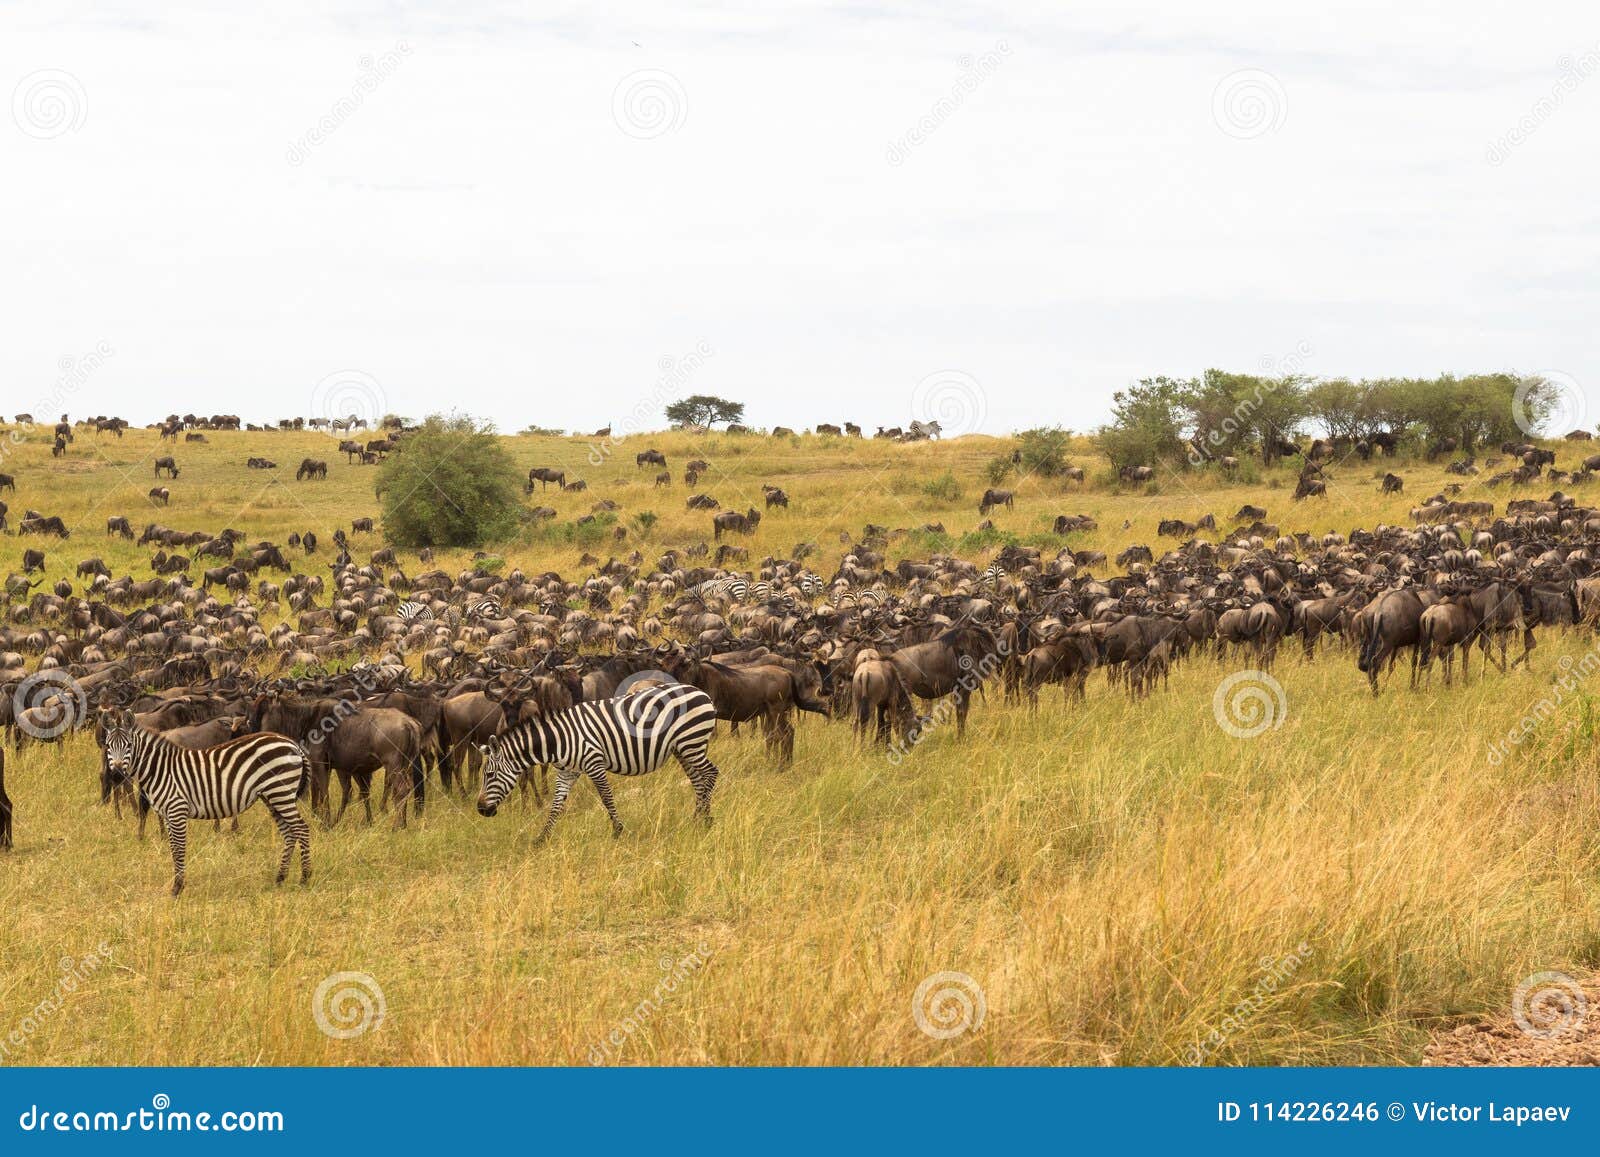 very big herds of ungulates on the serengeti plains. kenya, africa